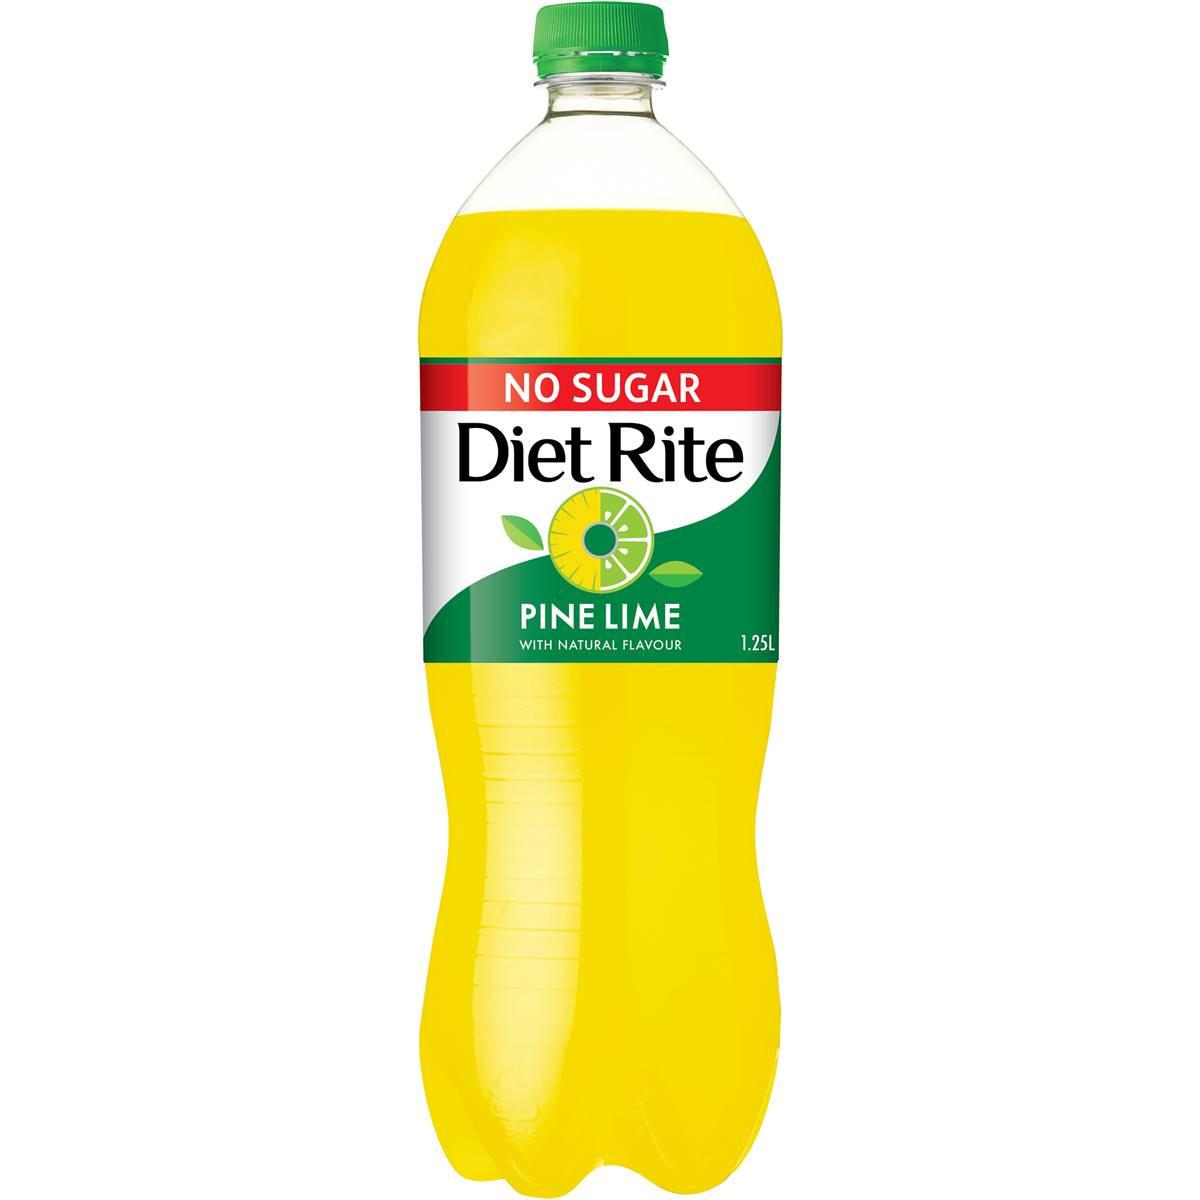 Diet Rite Pine Lime No Sugar 1.25l